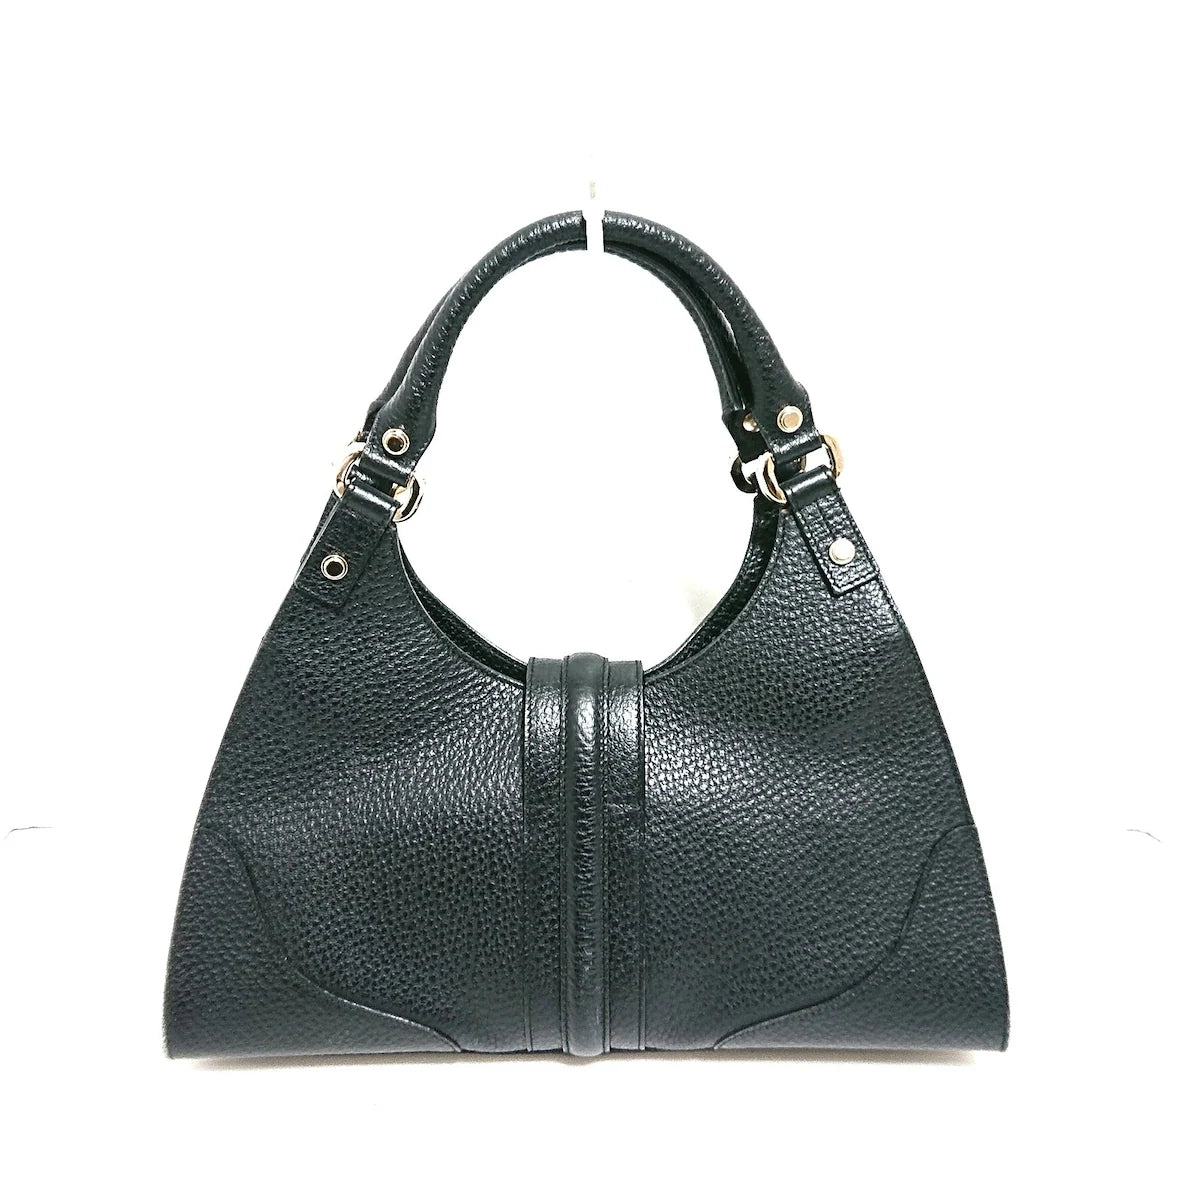 GUCCI - Black Leather Vintage Handbag